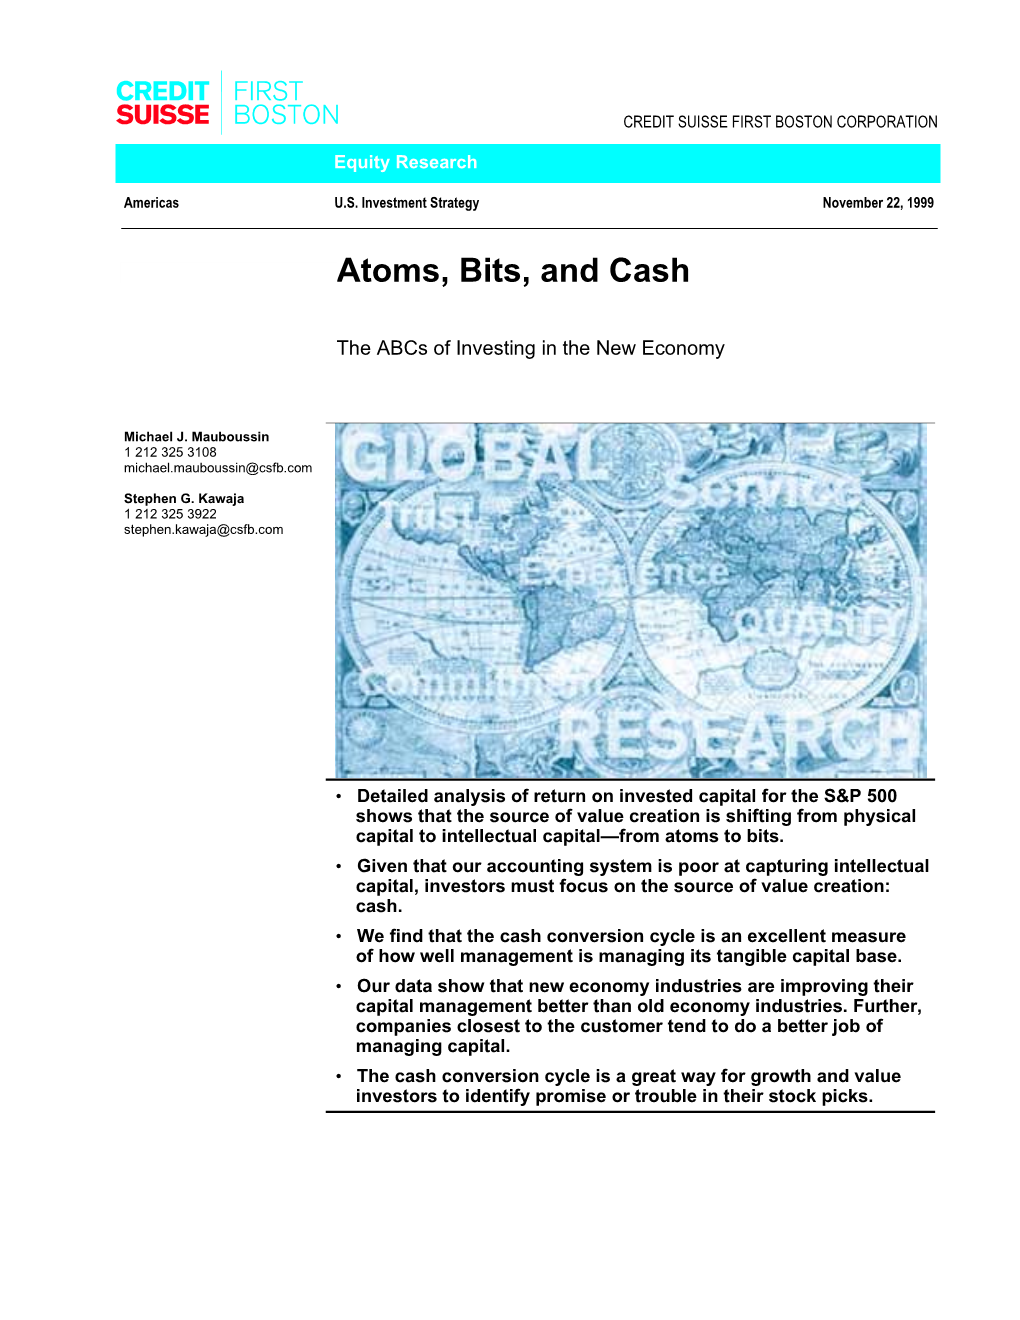 Atoms, Bits, and Cash